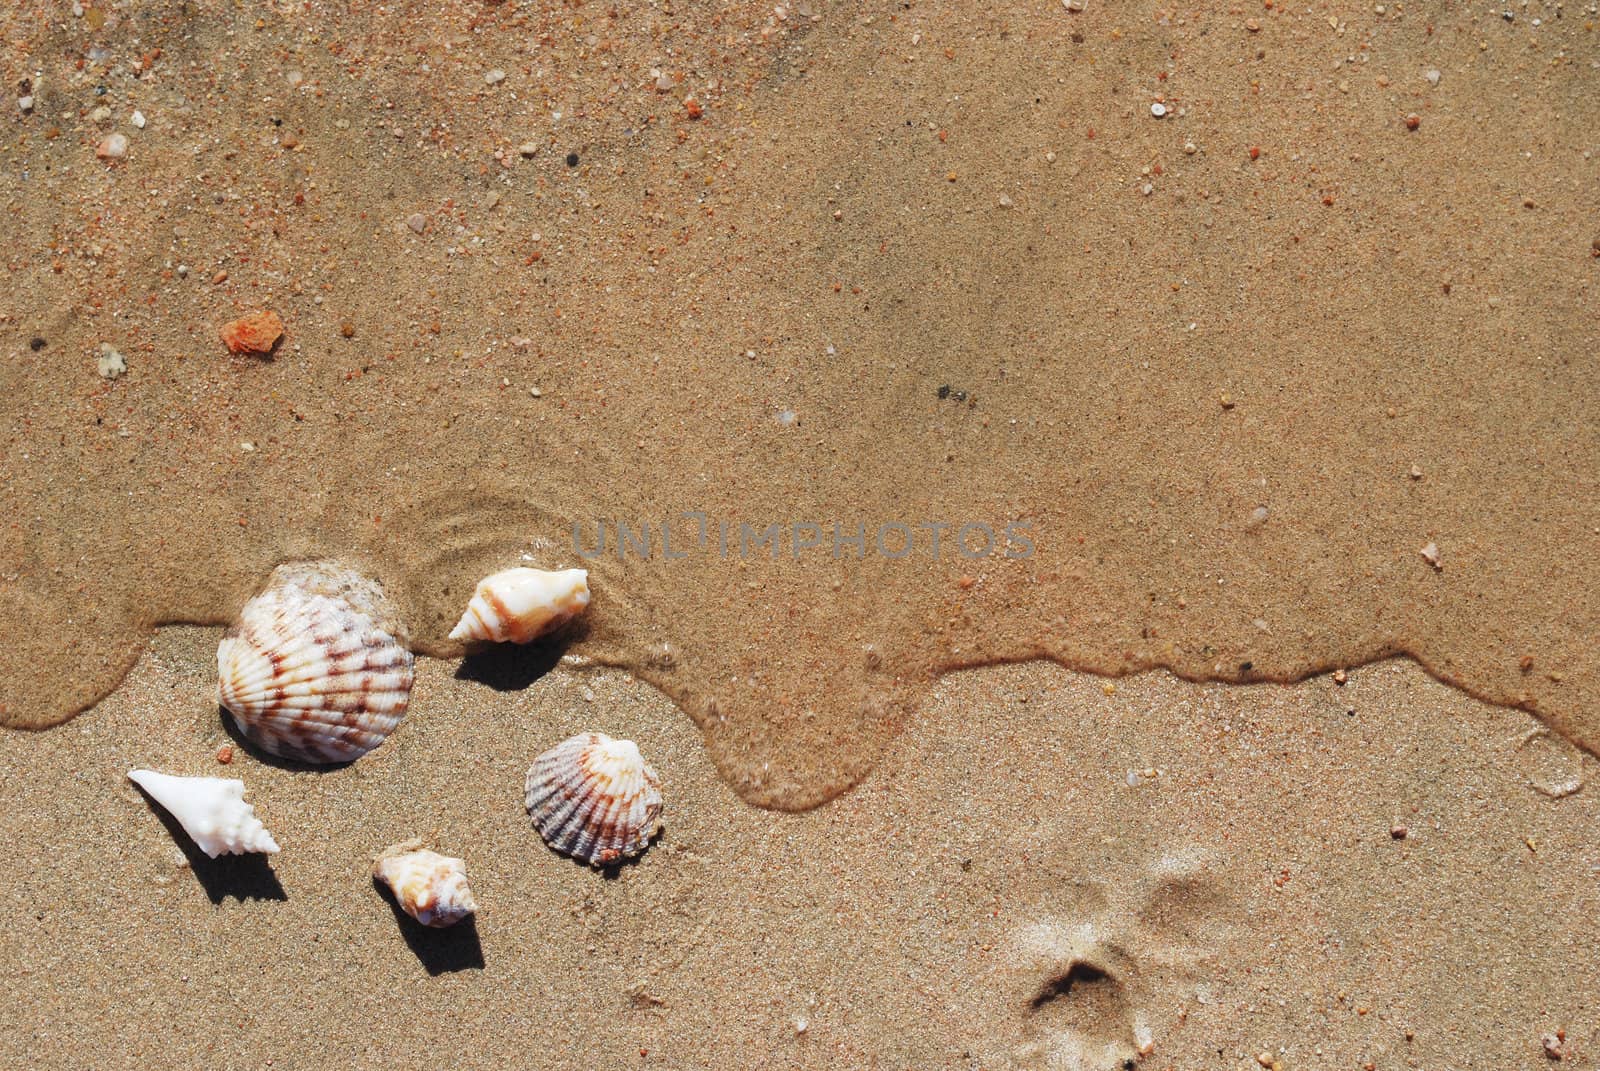 different seashells on a beach sand, marine landscape 